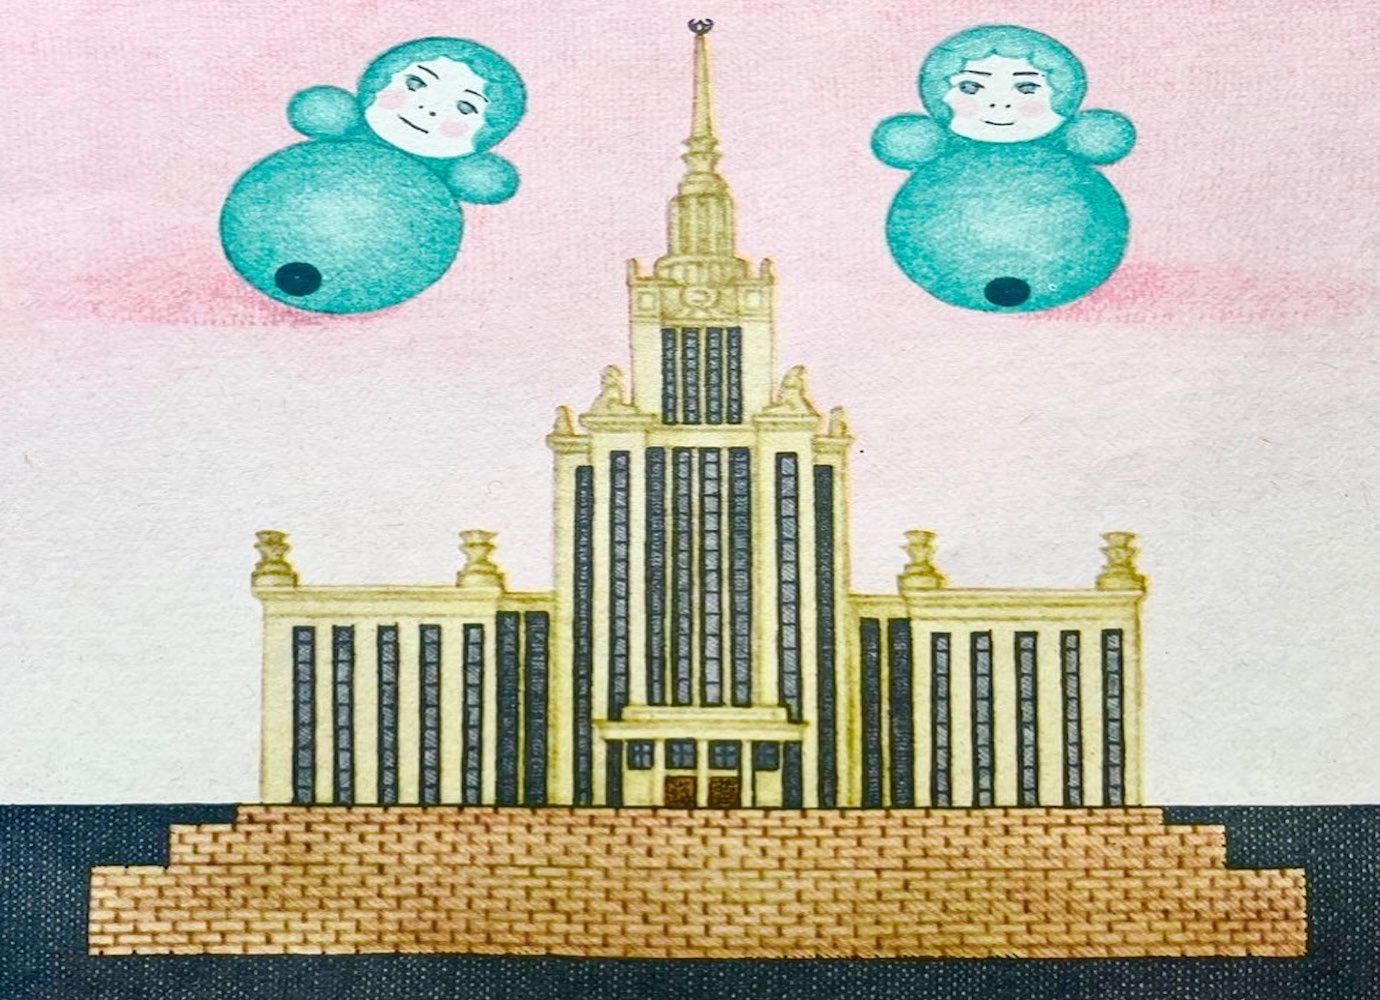 Uplifting, avant-garde children’s book illustrations from the USSR